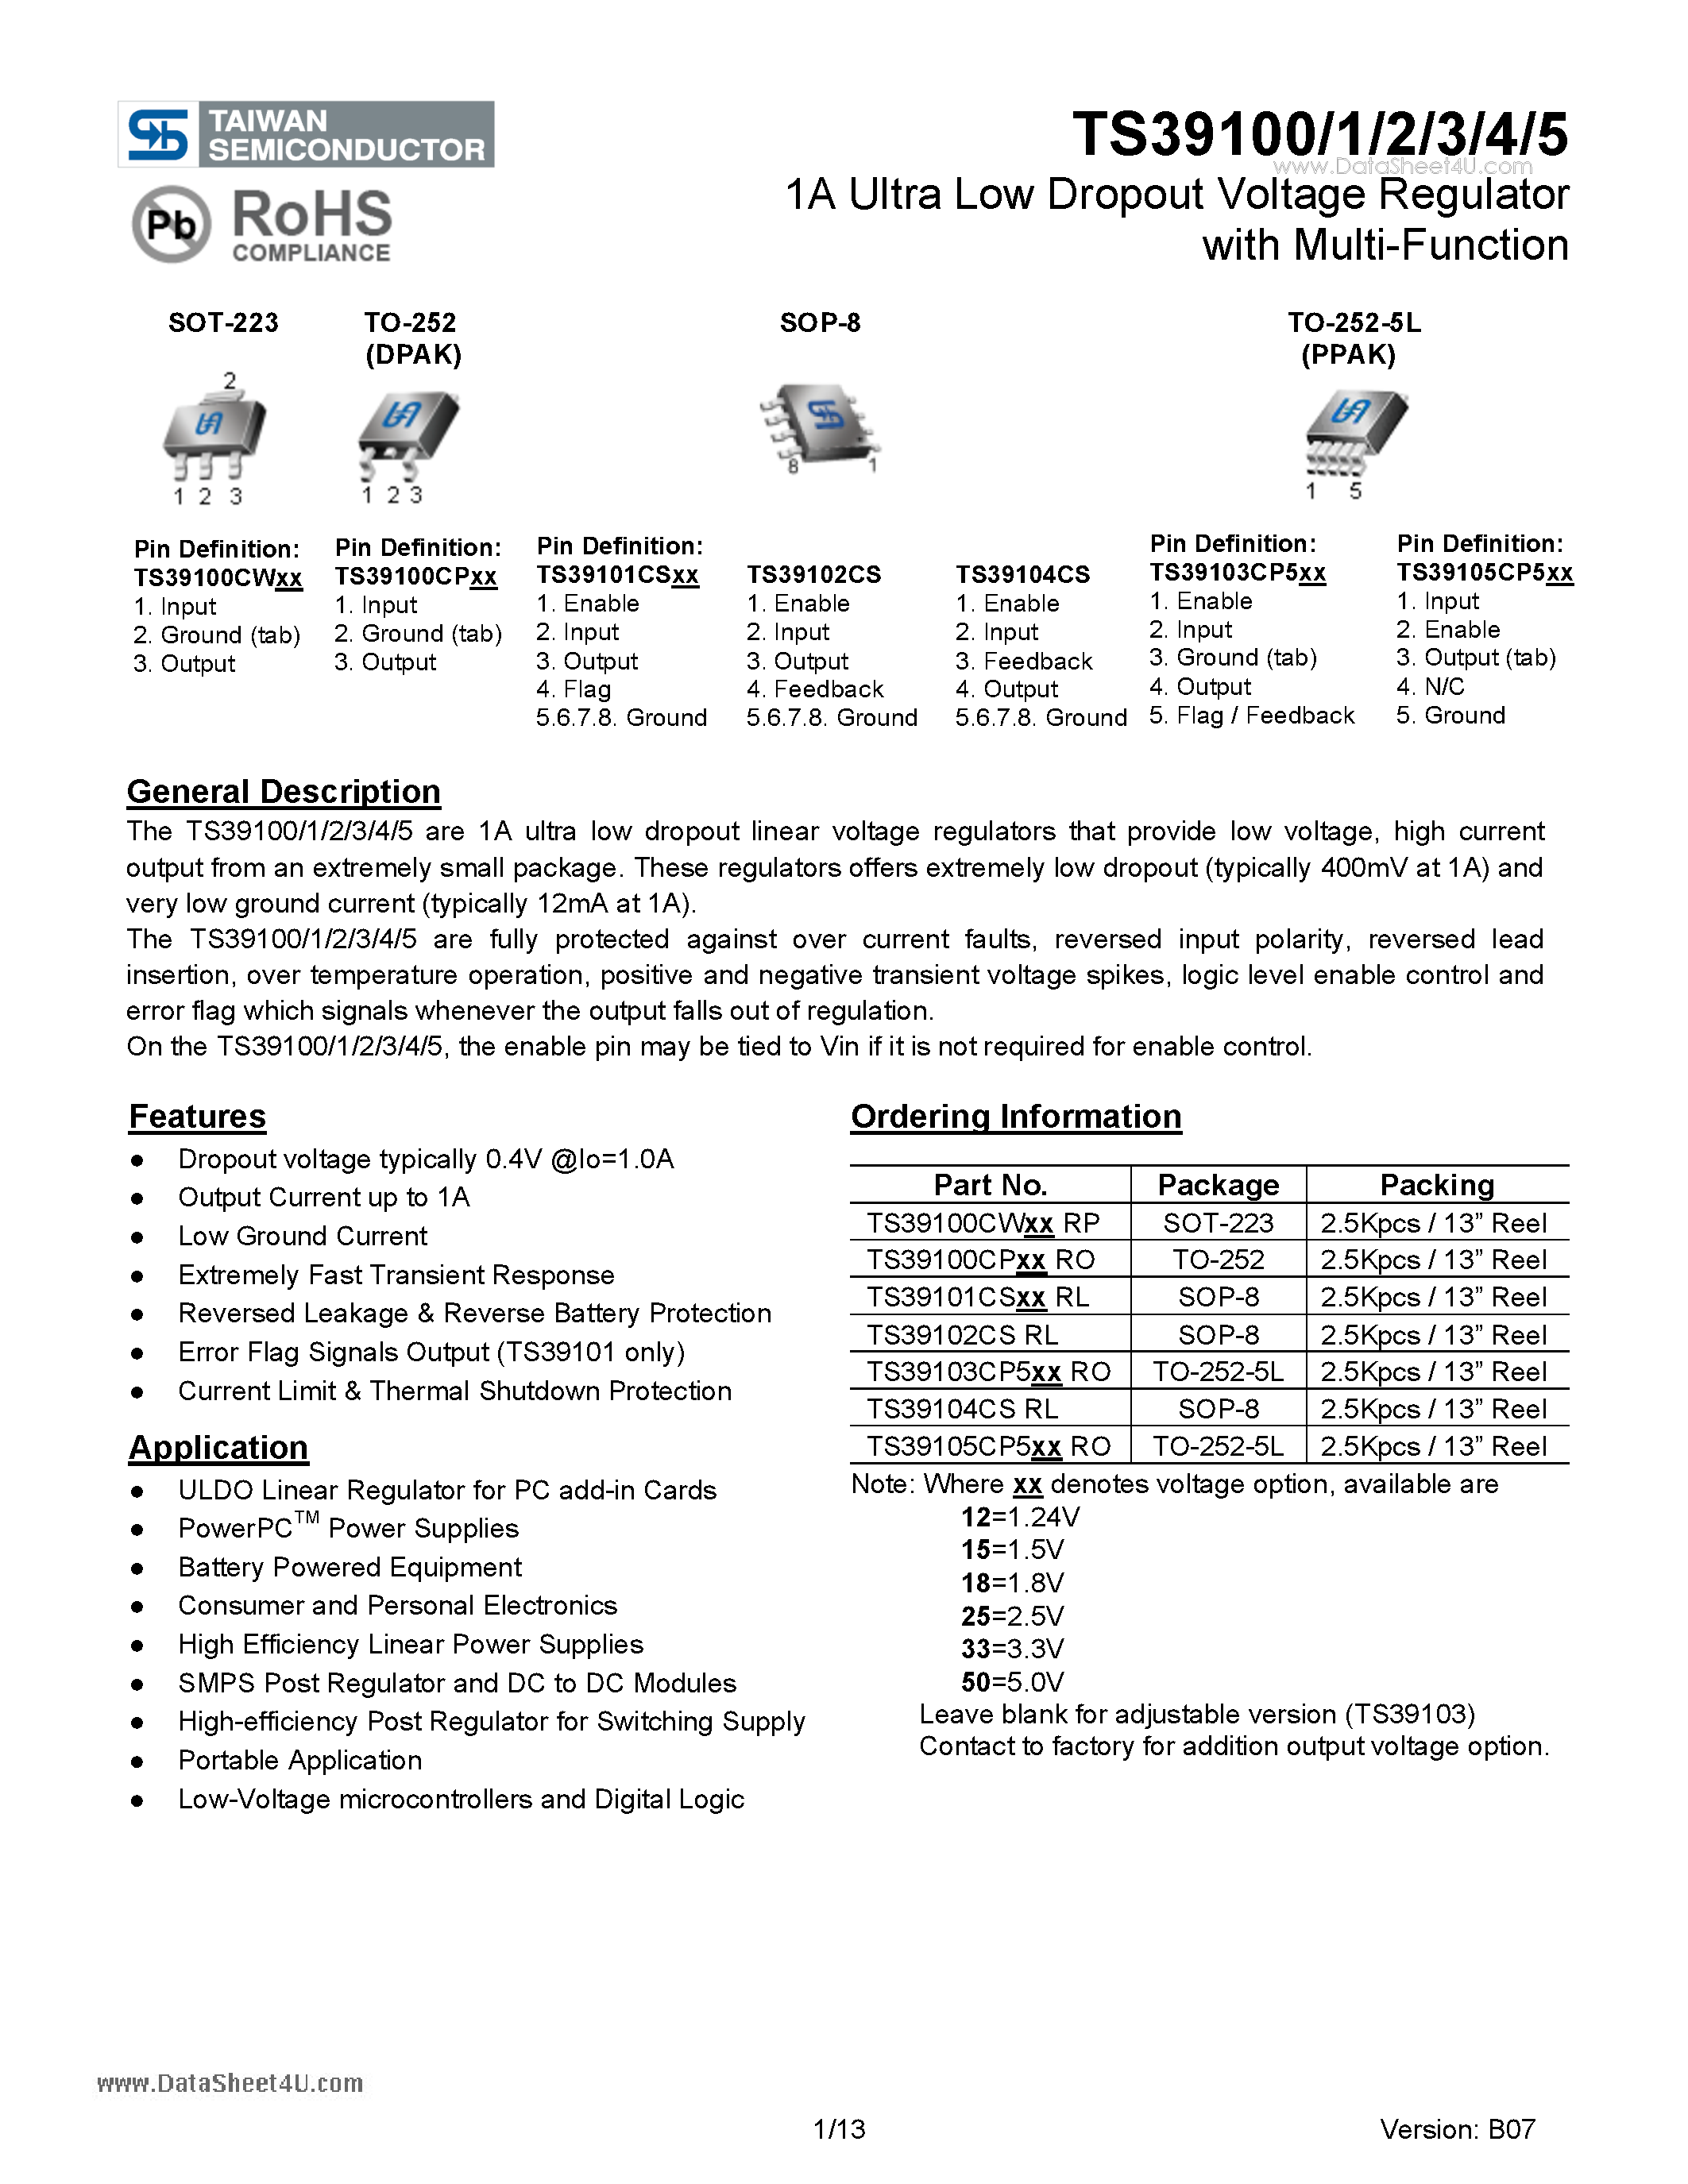 Datasheet TS39100 - (TS39100 - TS39105) 1A Ultra Low Dropout Voltage Regulator page 1